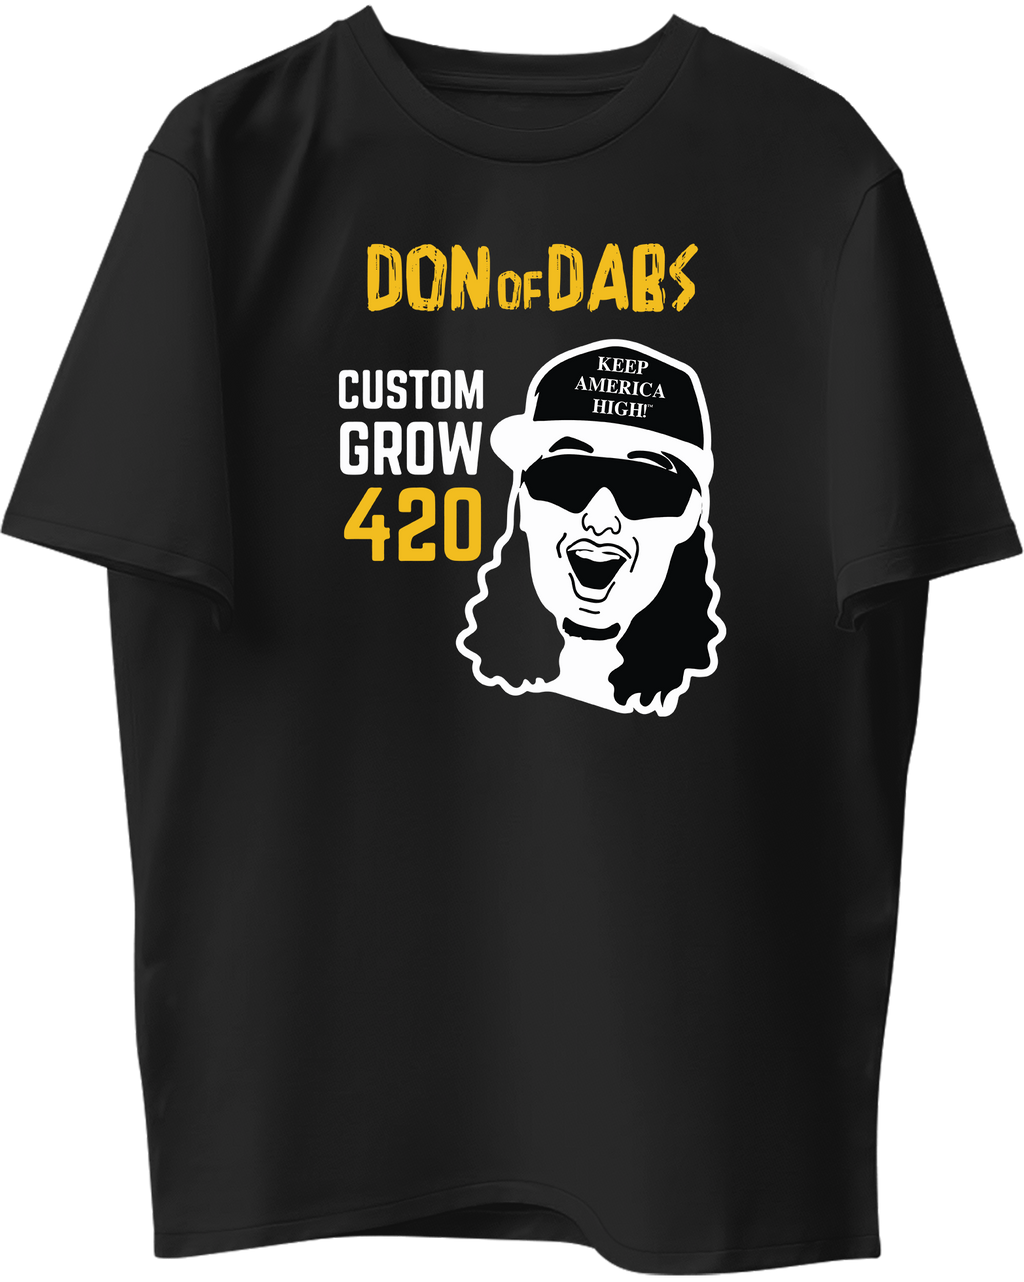 Custom Grow 420 x Keep America High T-Shirt